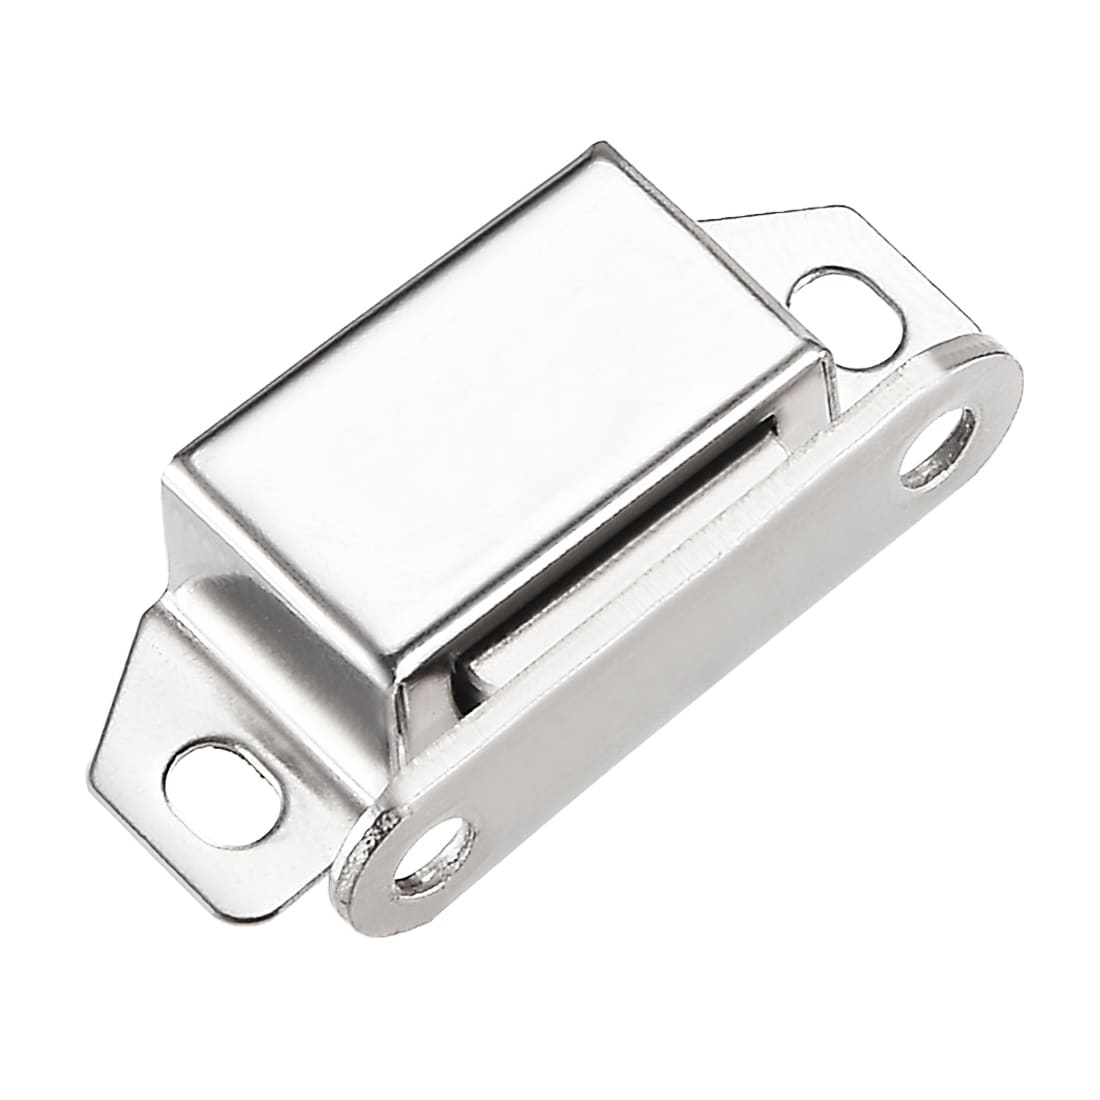 Unique Bargains Door Cabinet Magnetic Catch Magnet Latch Closure Stainless Steel 36mm Length - 36mm, 1Pcs